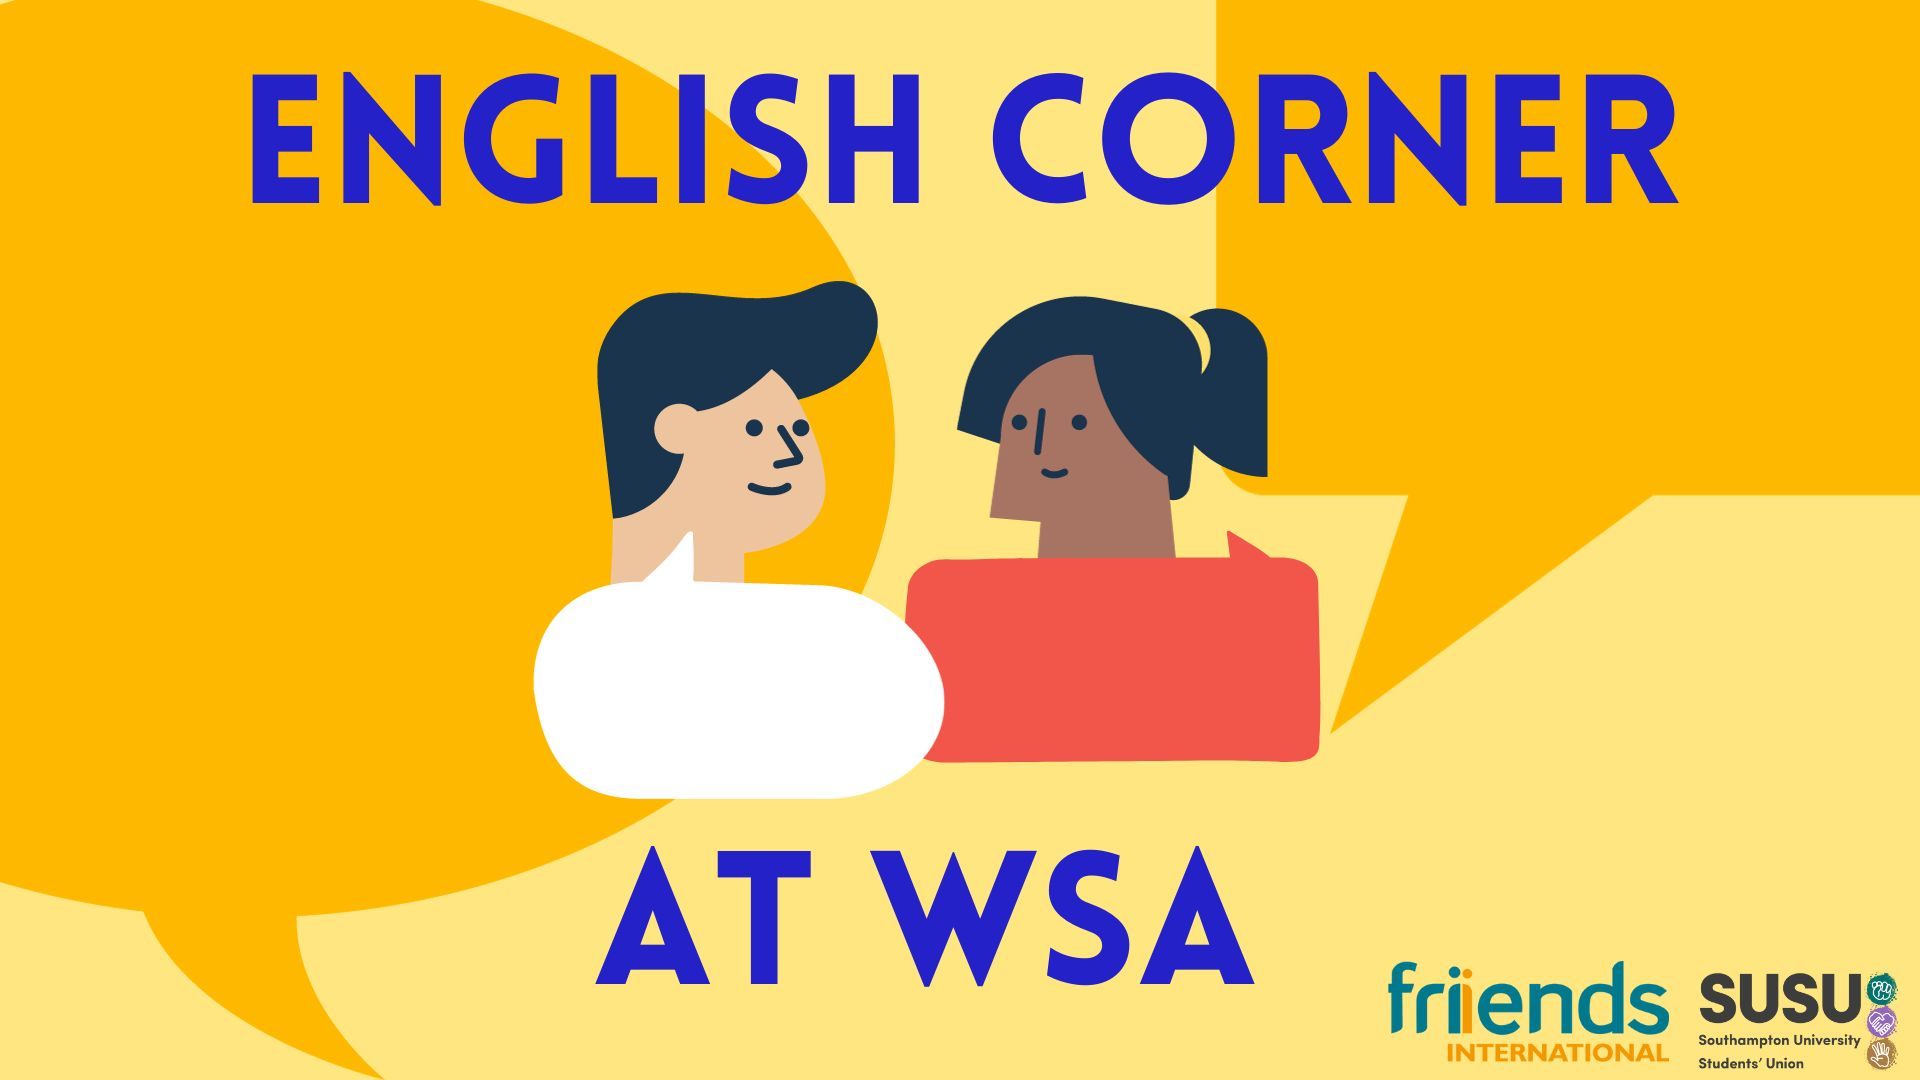 English Corner at WSA